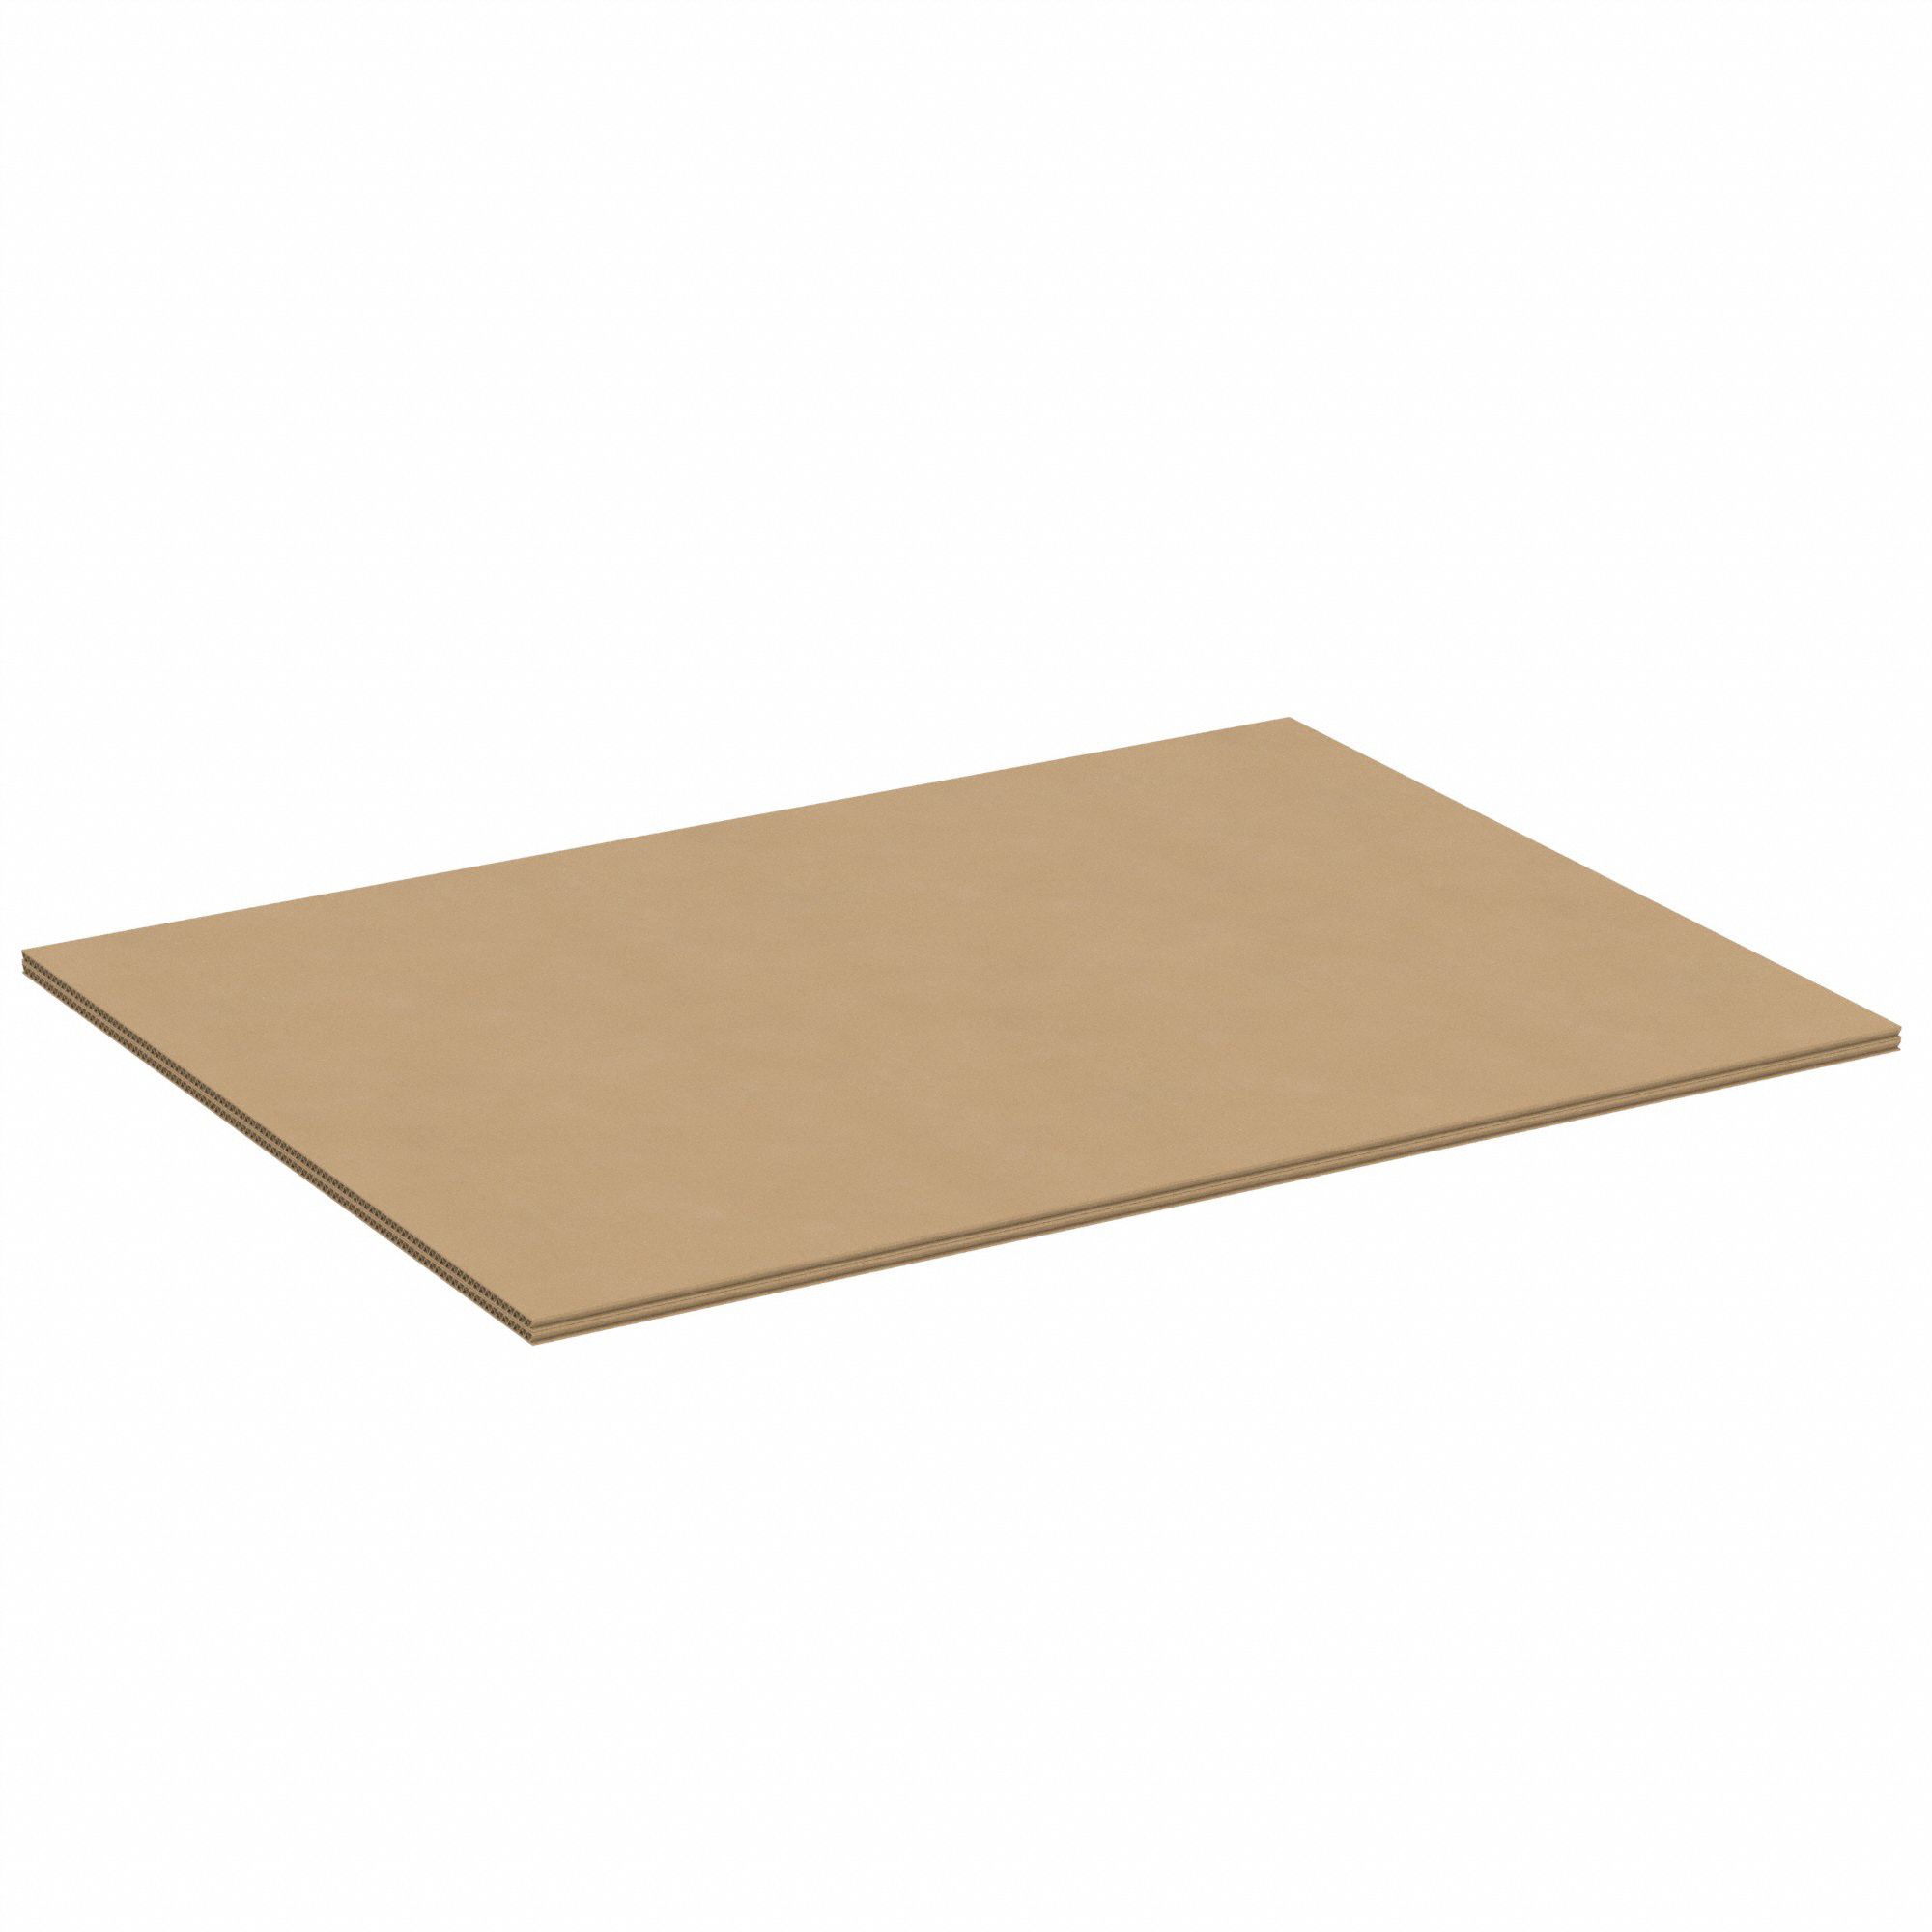 Flat Cardboard Sheets and Cardboard Pads